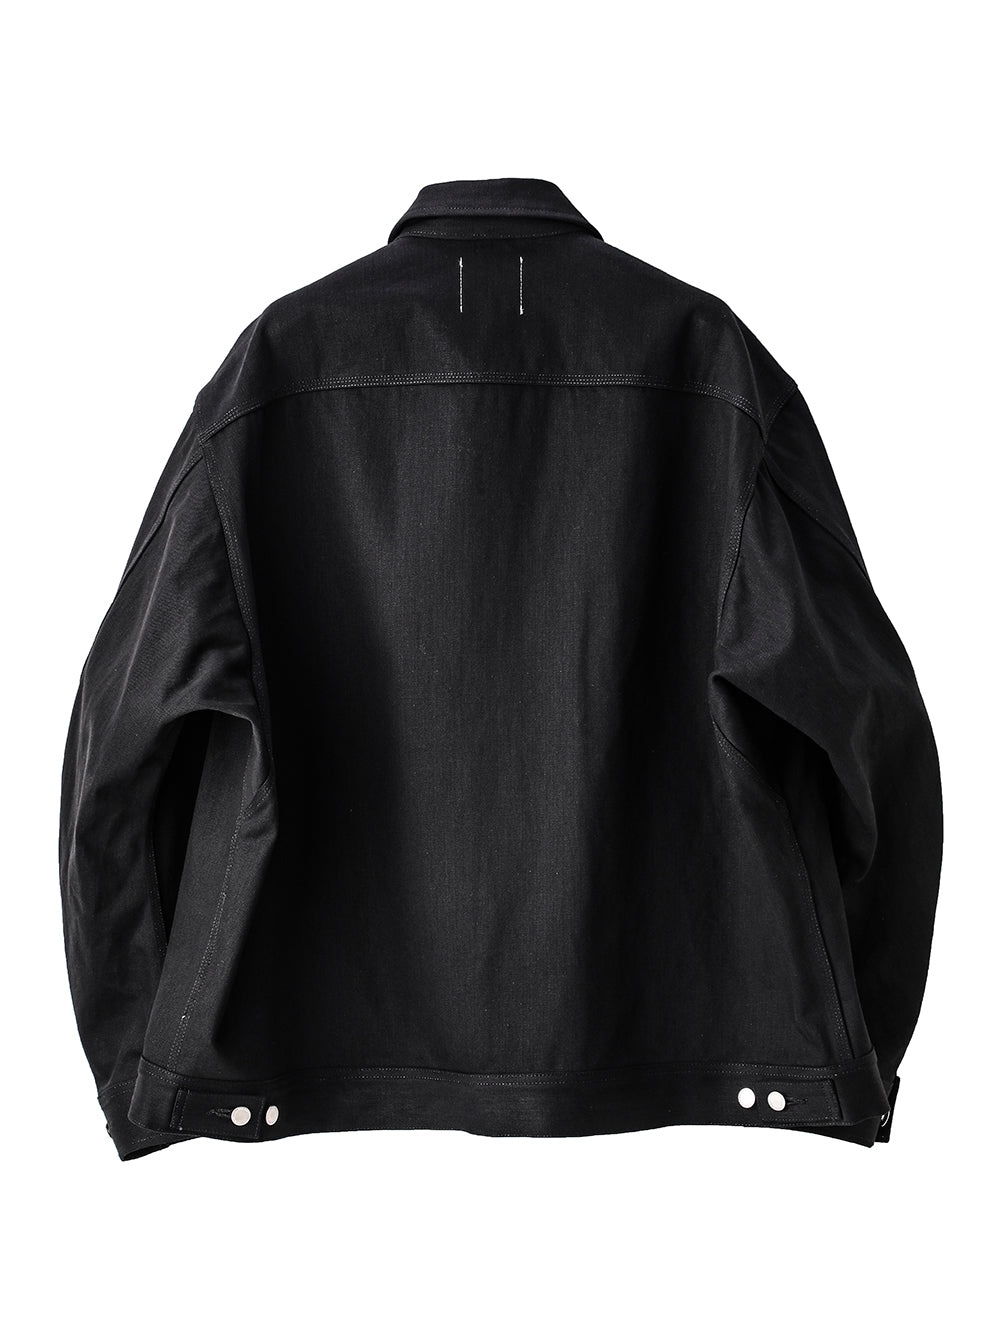 sj.0011aSS24-black back gusset sleeve worker jacket. Lonely Souls 